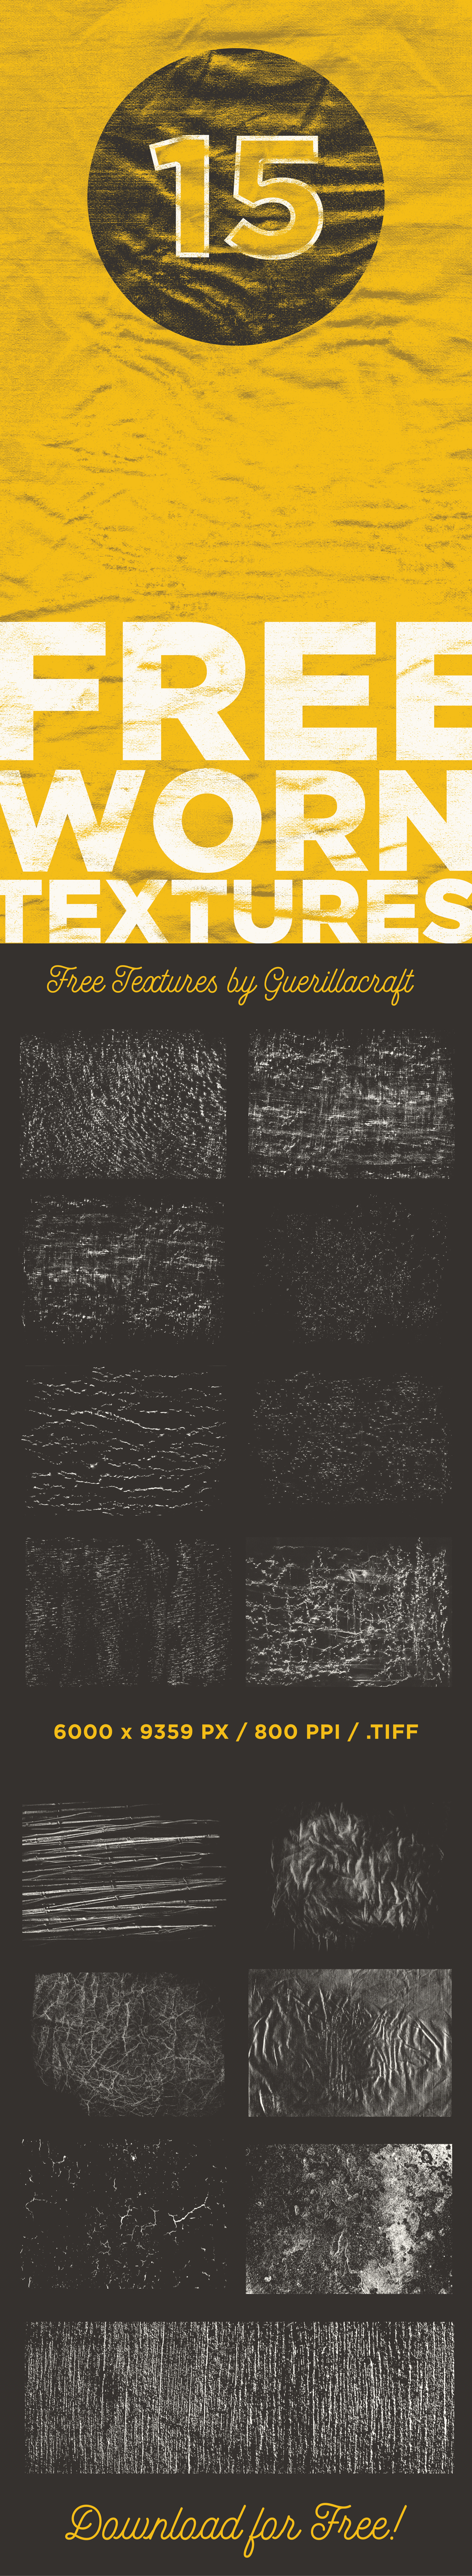 Worn-Textures-Long.jpg